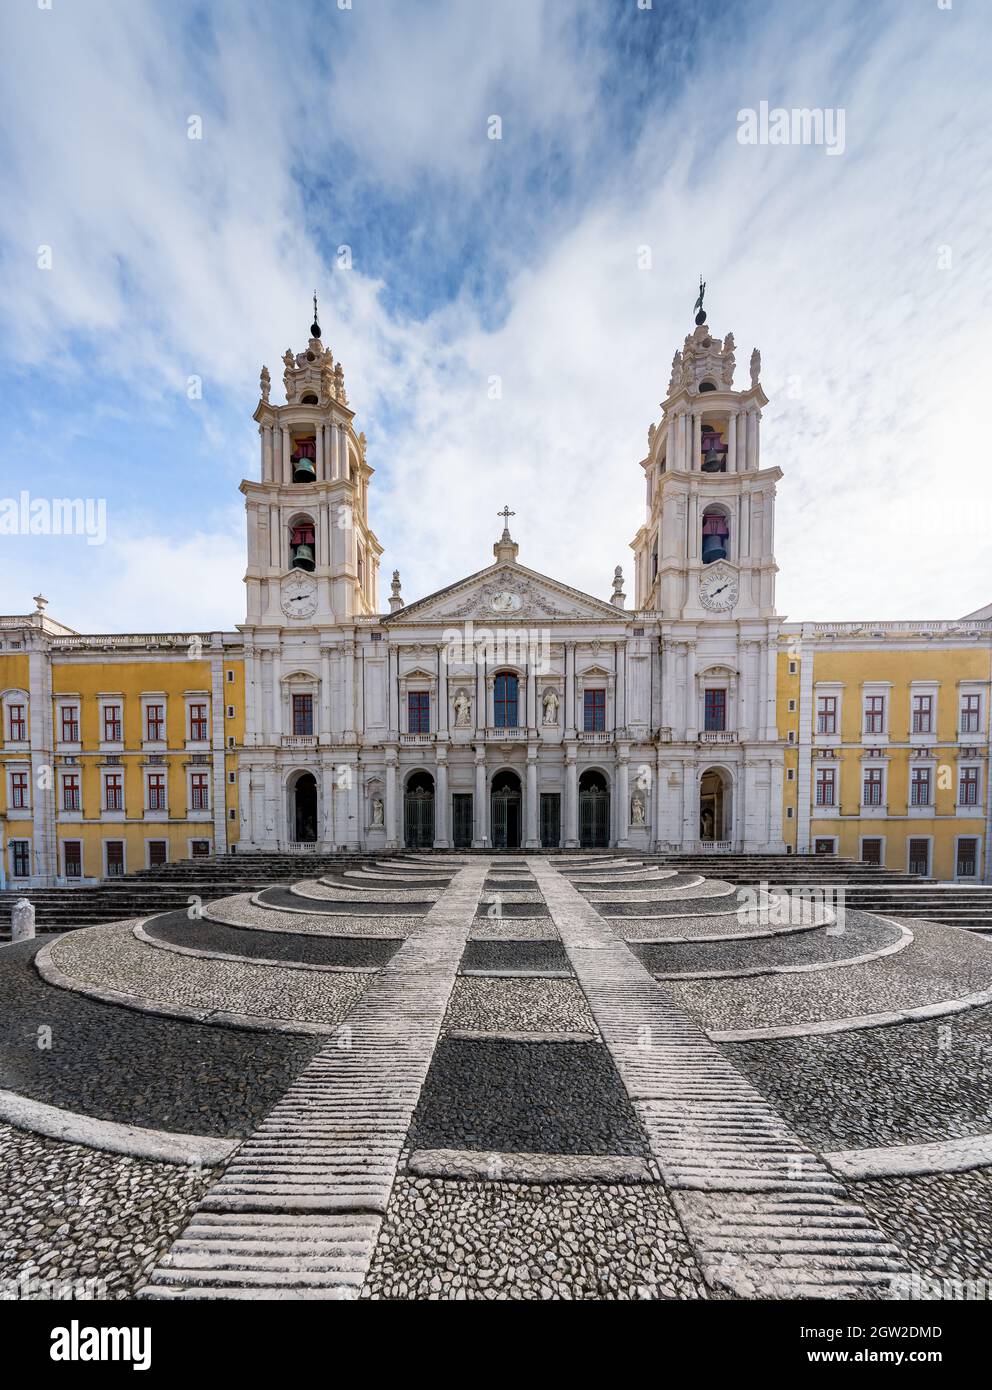 Palace of Mafra Facade - Mafra, Portugal Stock Photo